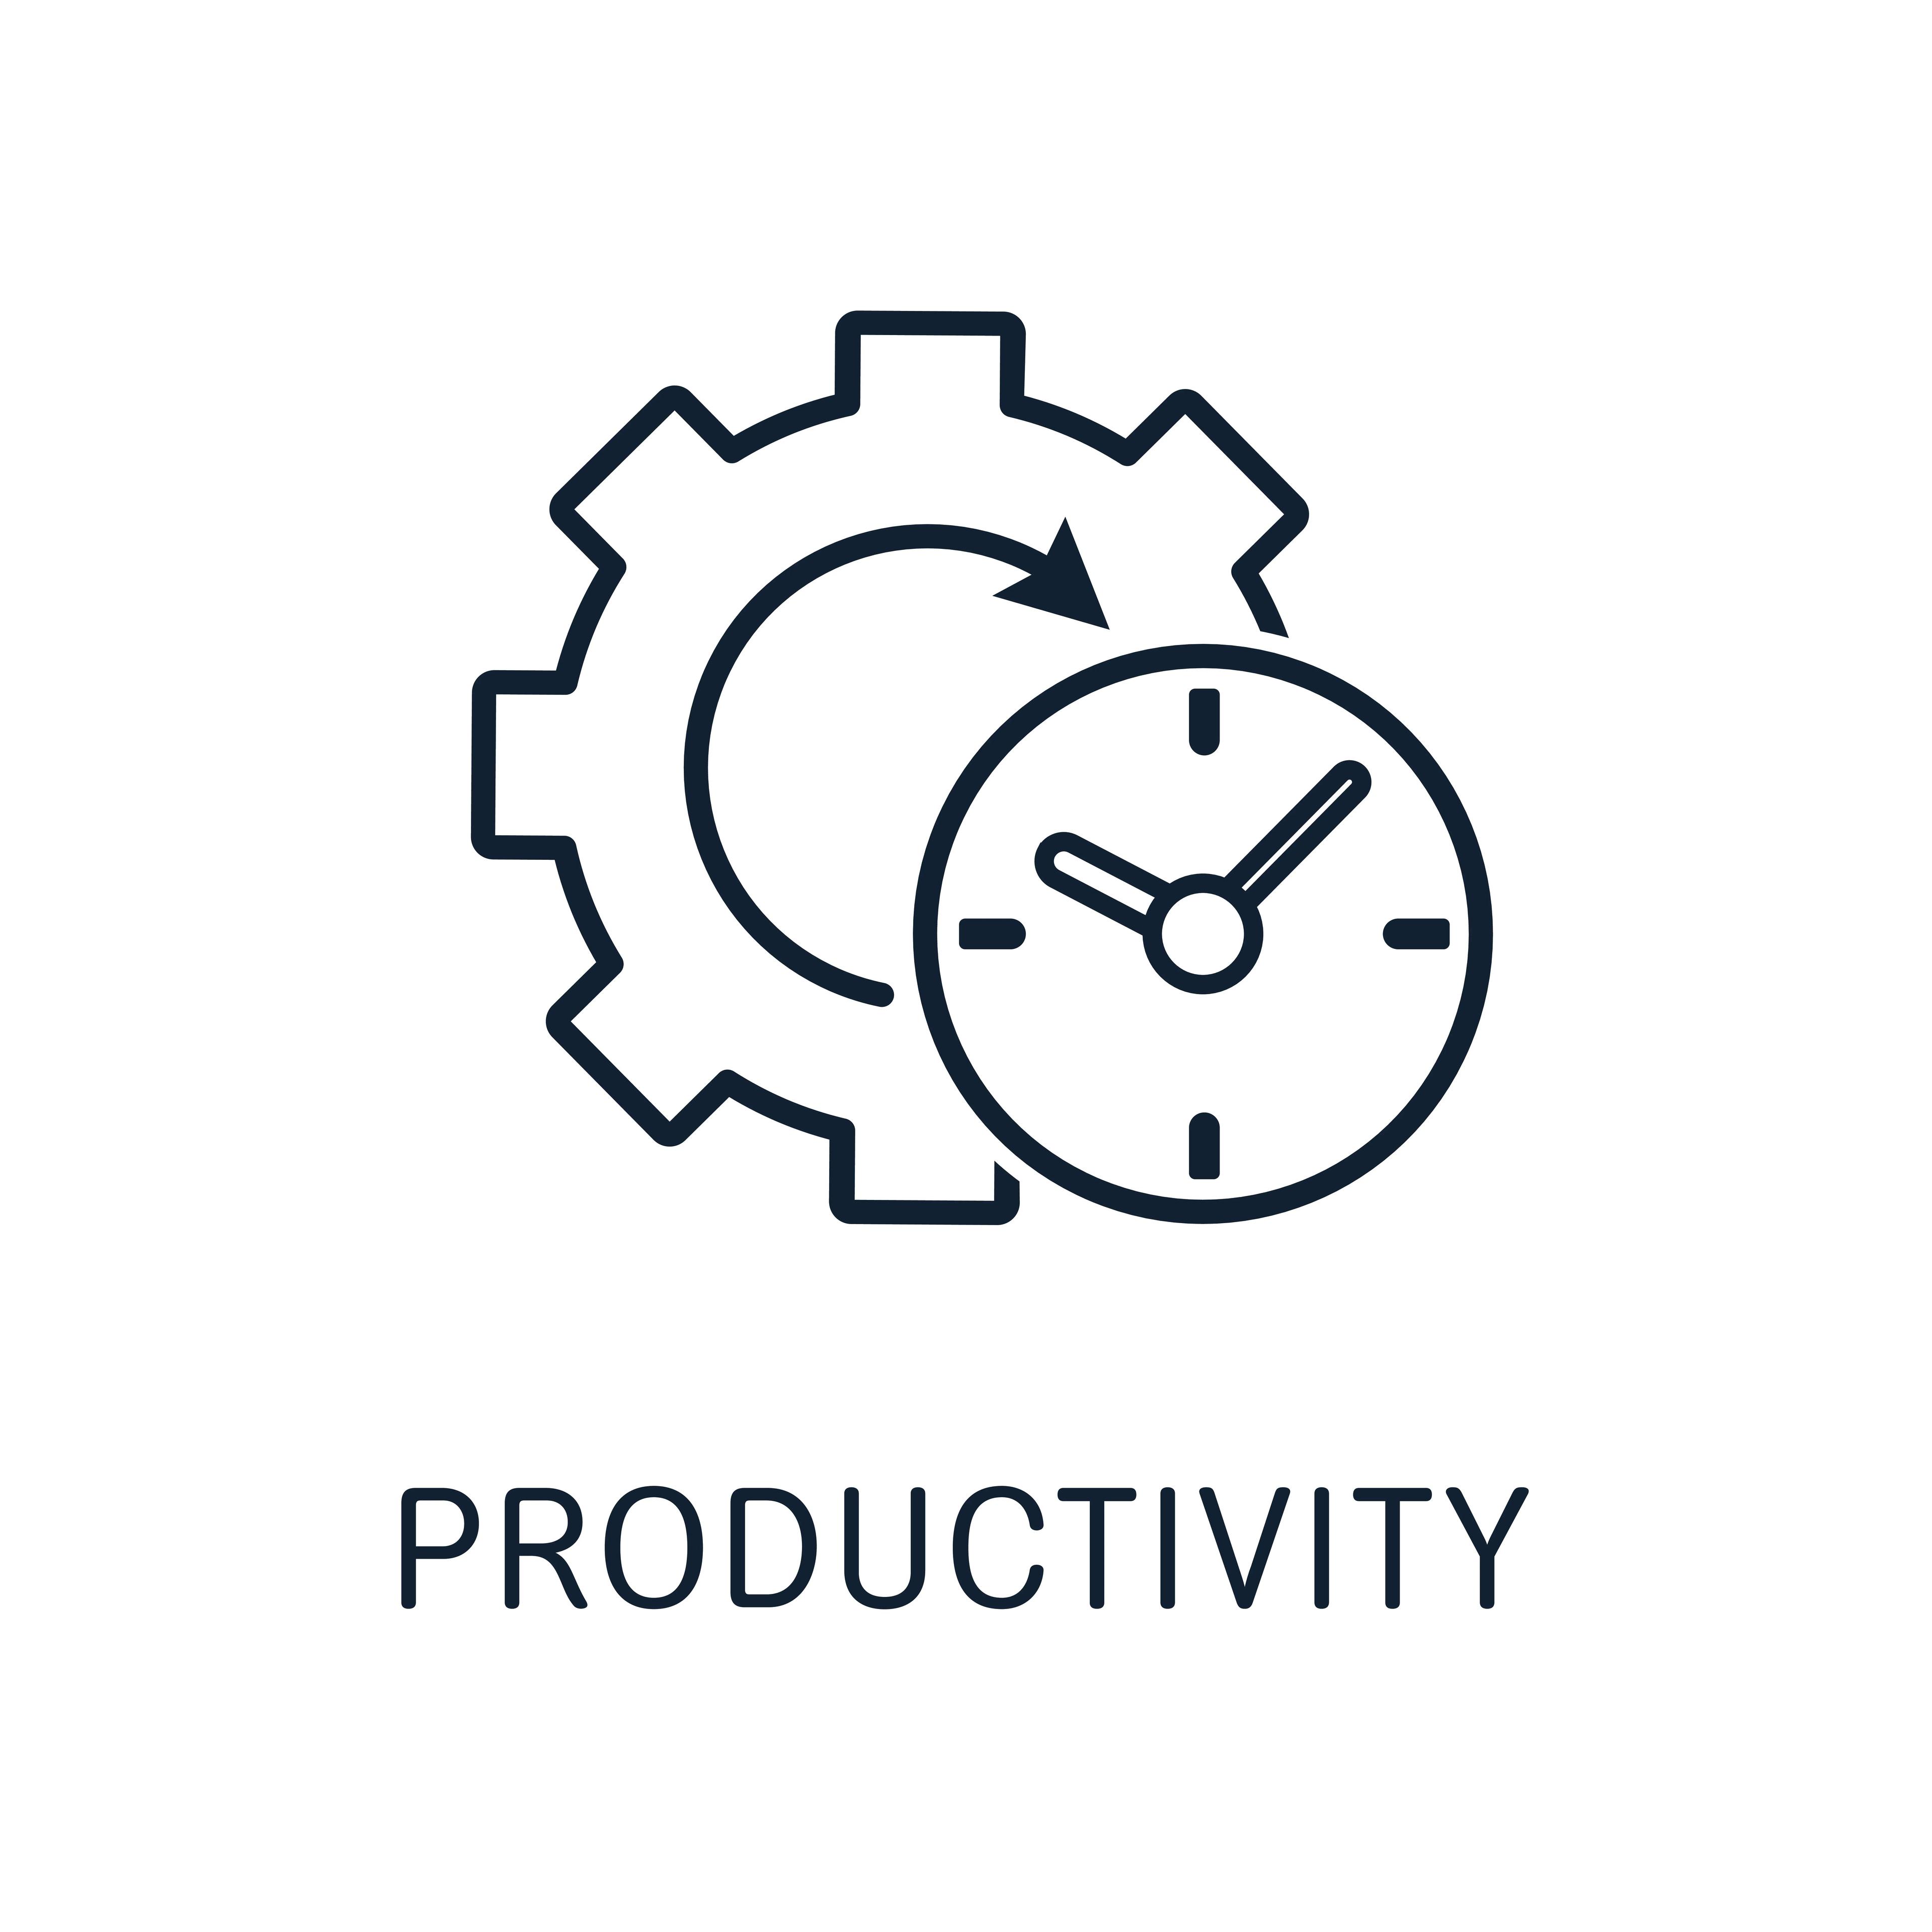 How to Measure Developer Productivity